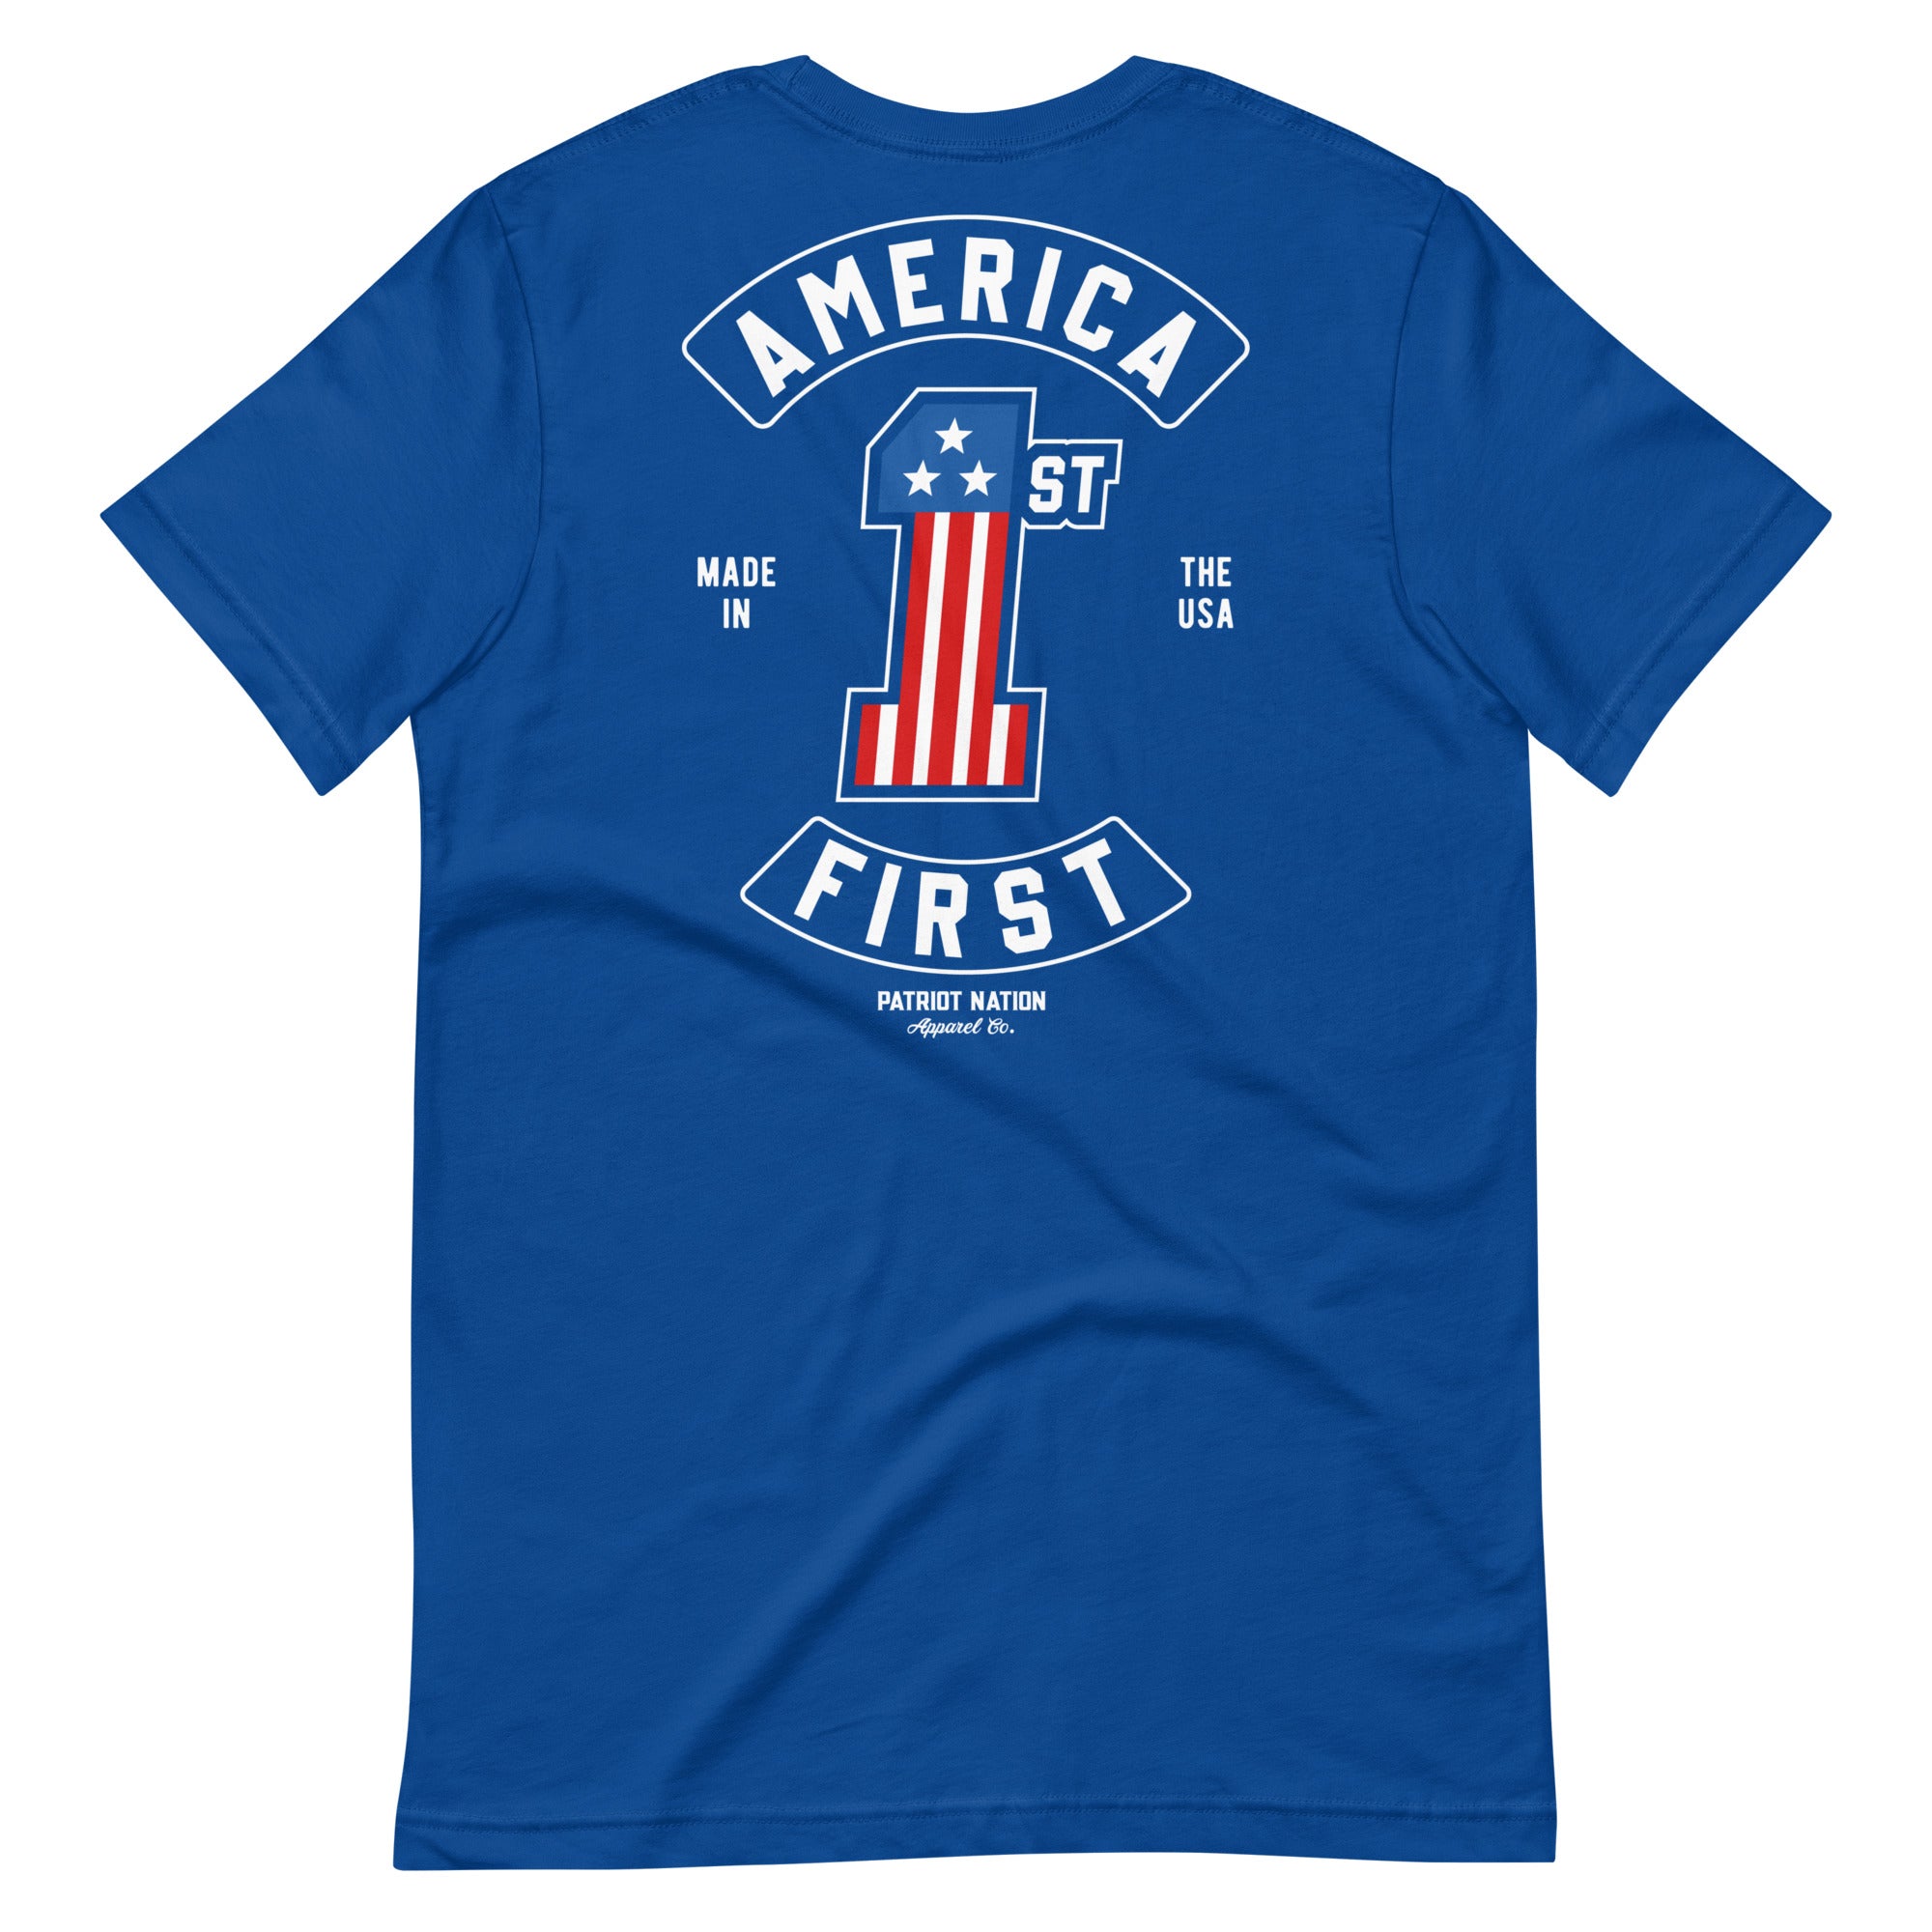 America 1st T-shirt